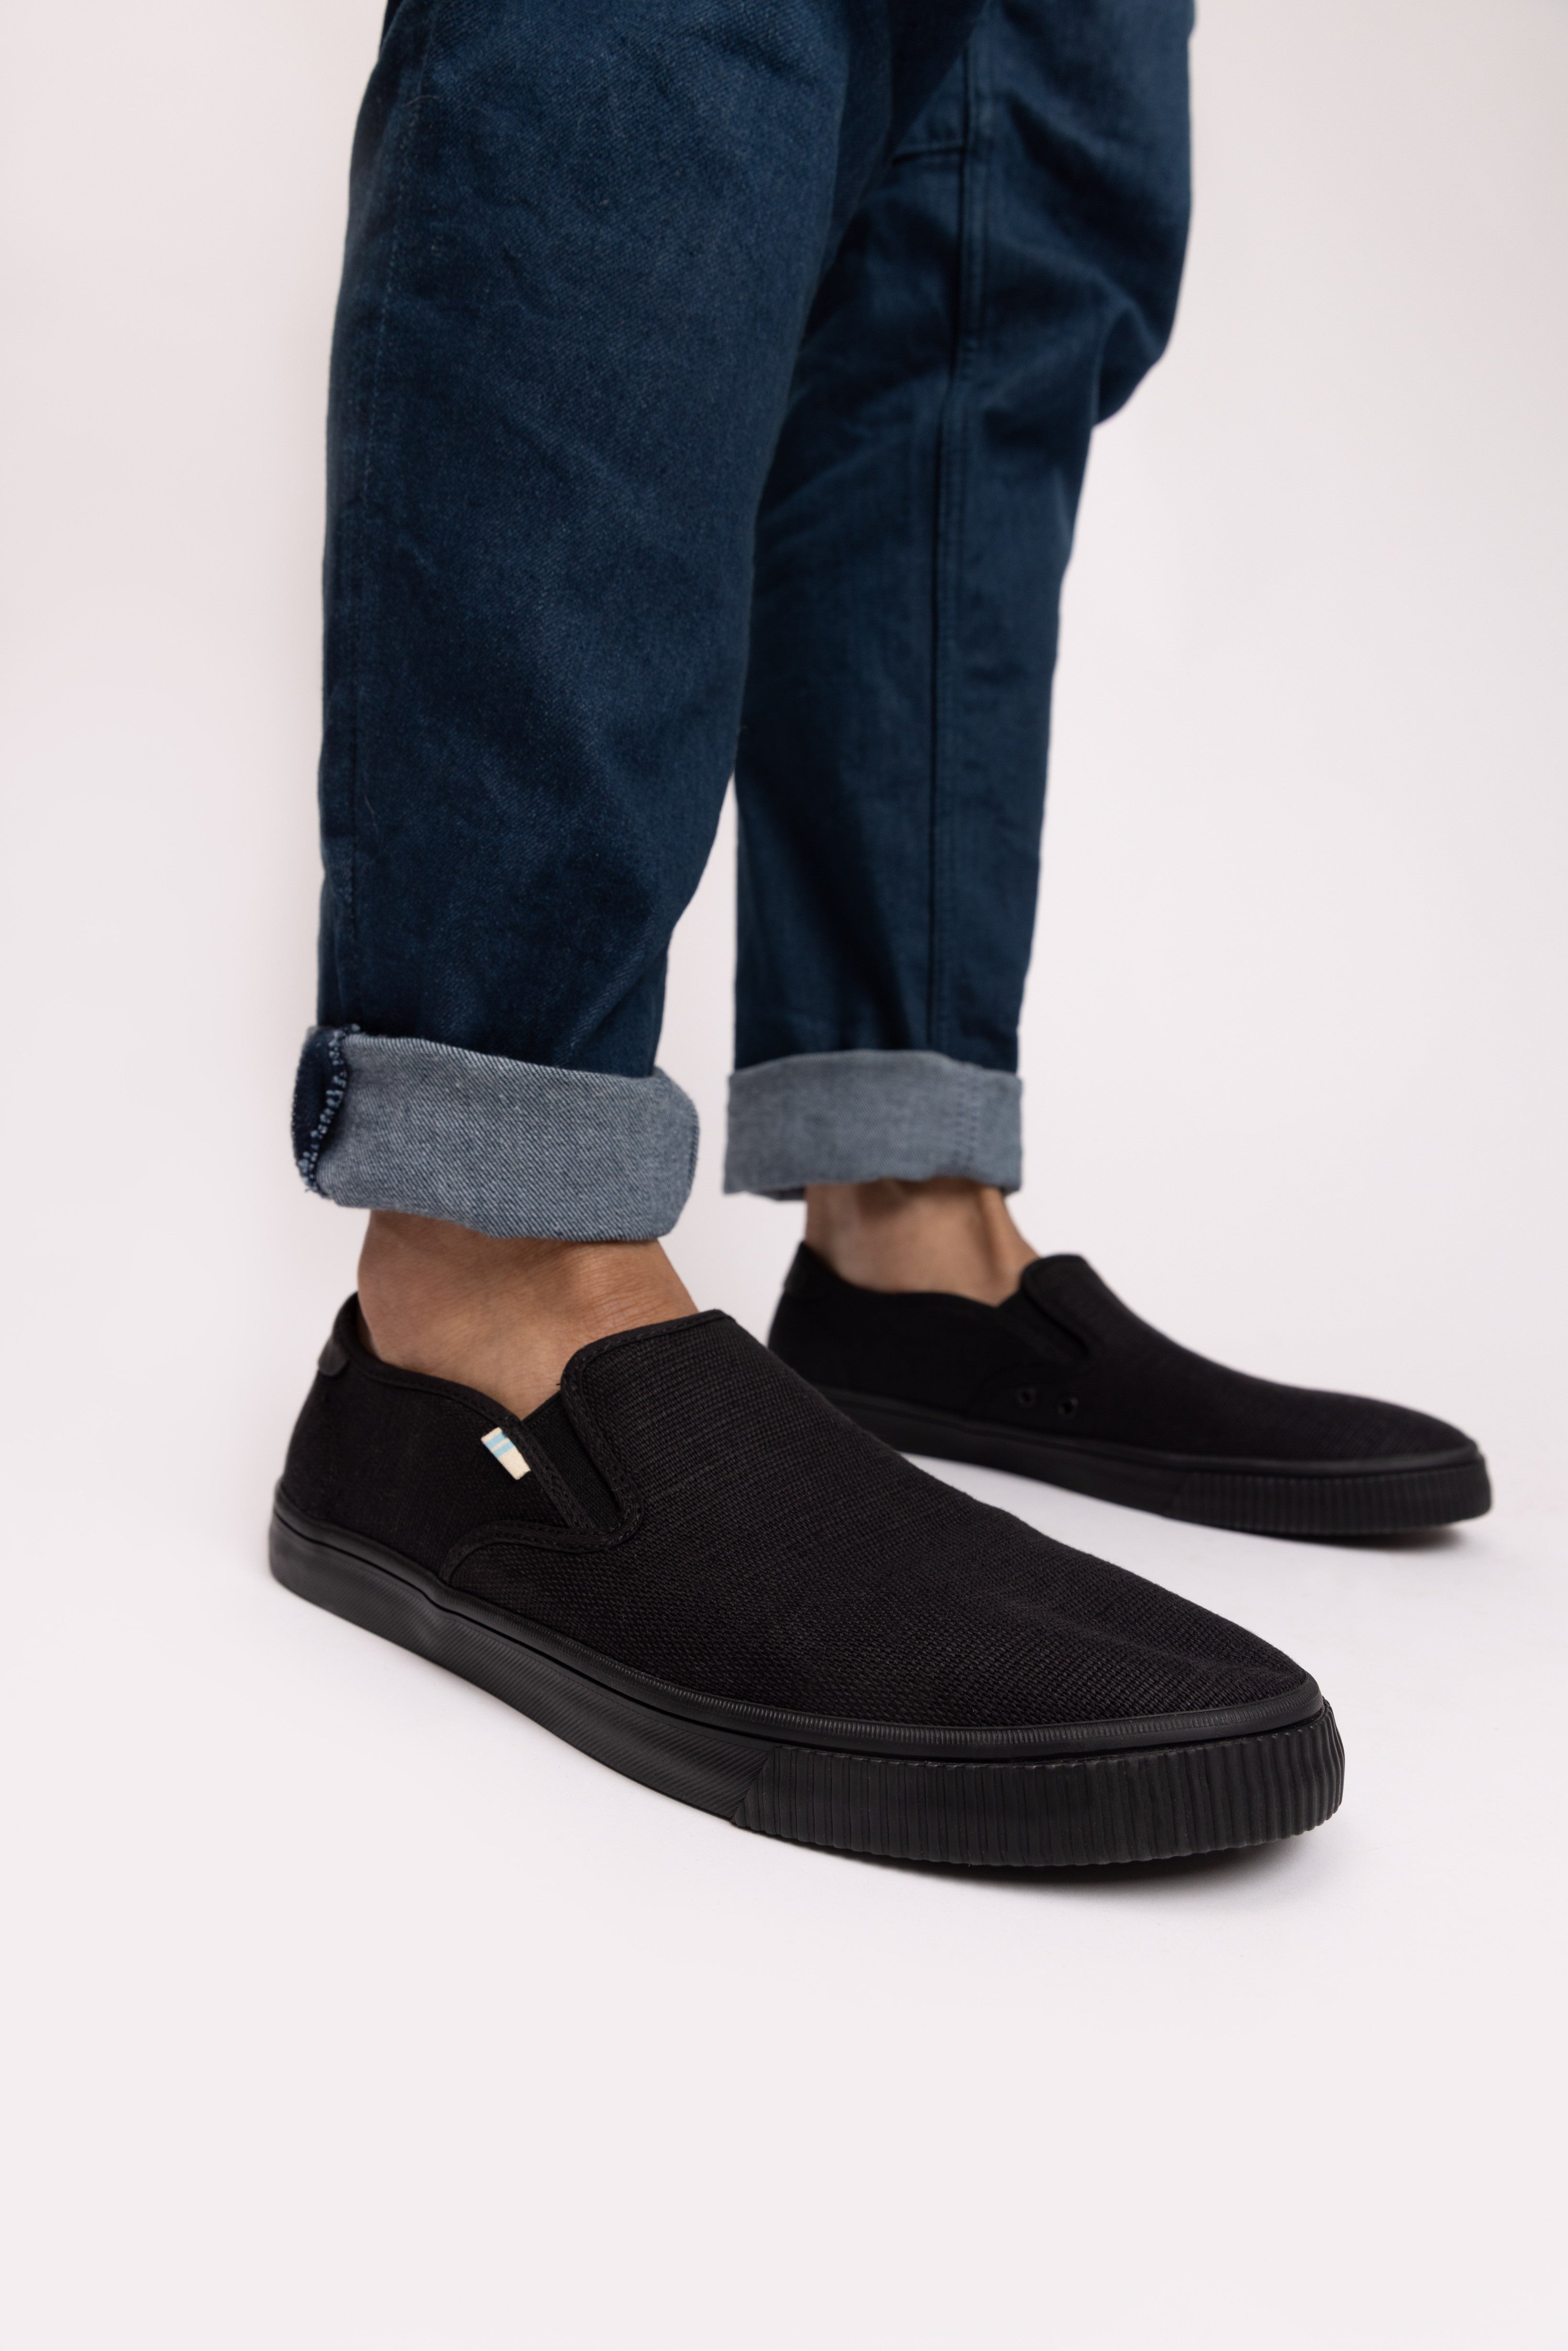 Calcetto CLT-0980 Full Black Men Casual Shoes – Vision Shoe Company